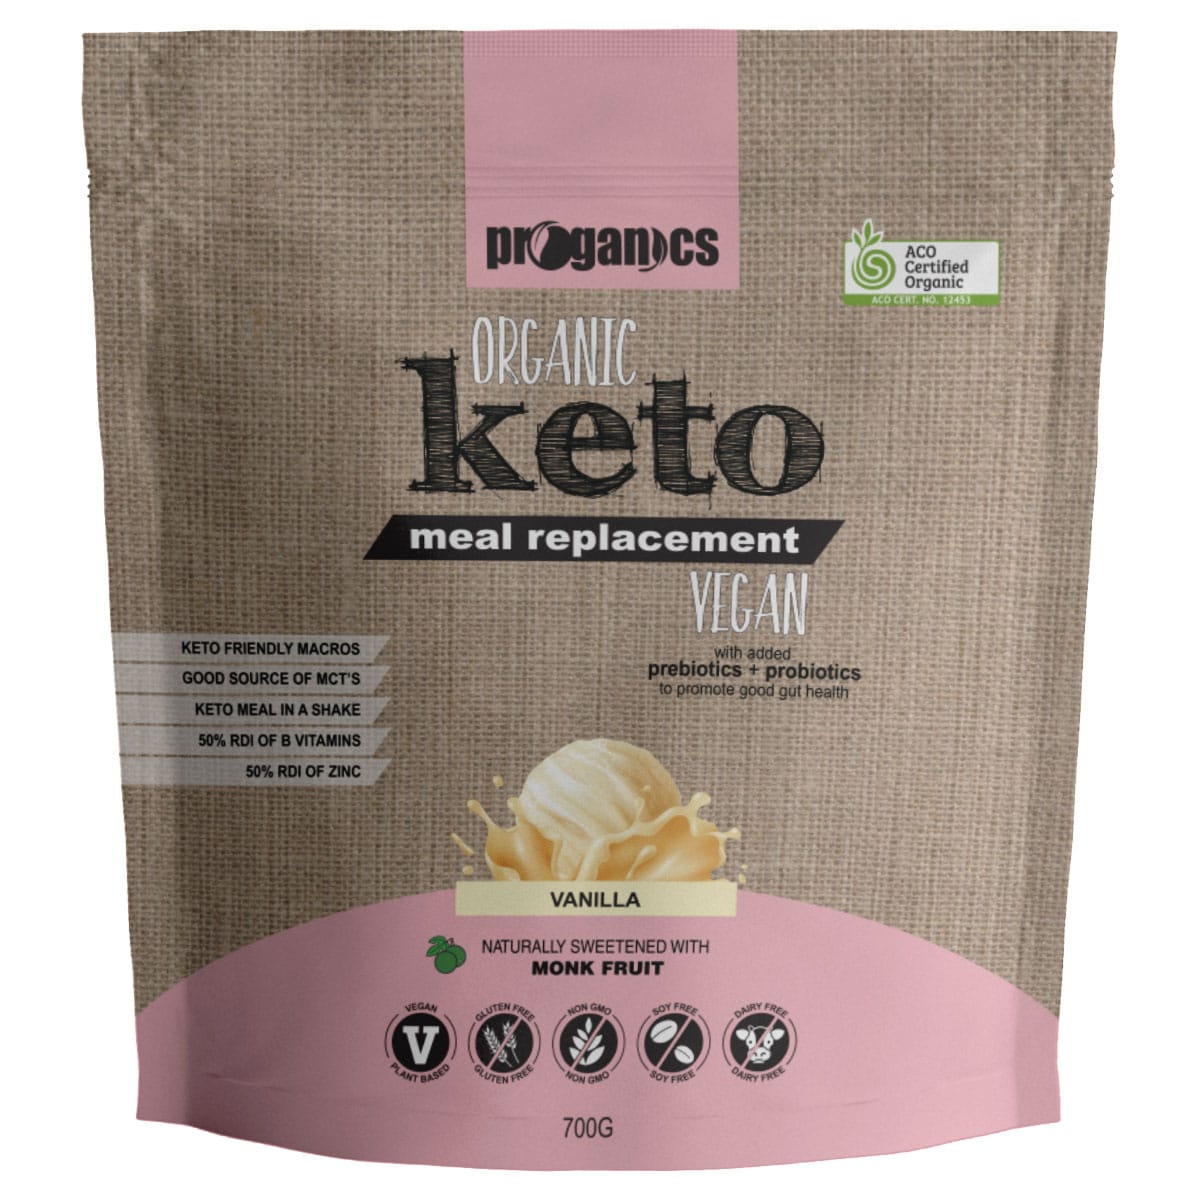 Proganics Organic Keto Meal Replacement Vanilla 700g Australia